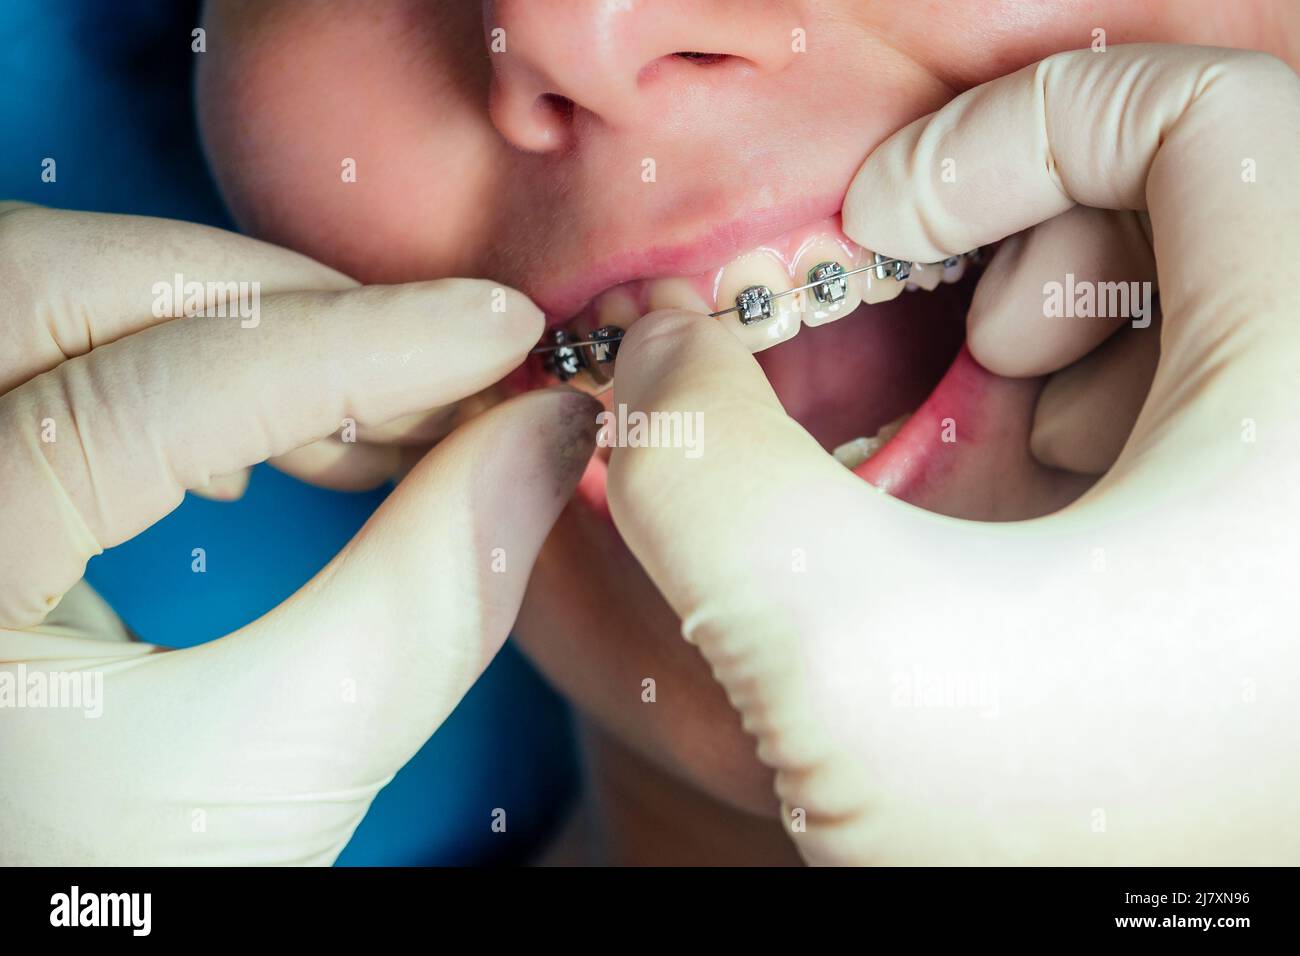 Bocca aperta dentale femmina con rinforzi in gel fissatore alla reception.Bracket System kappa close up Foto Stock